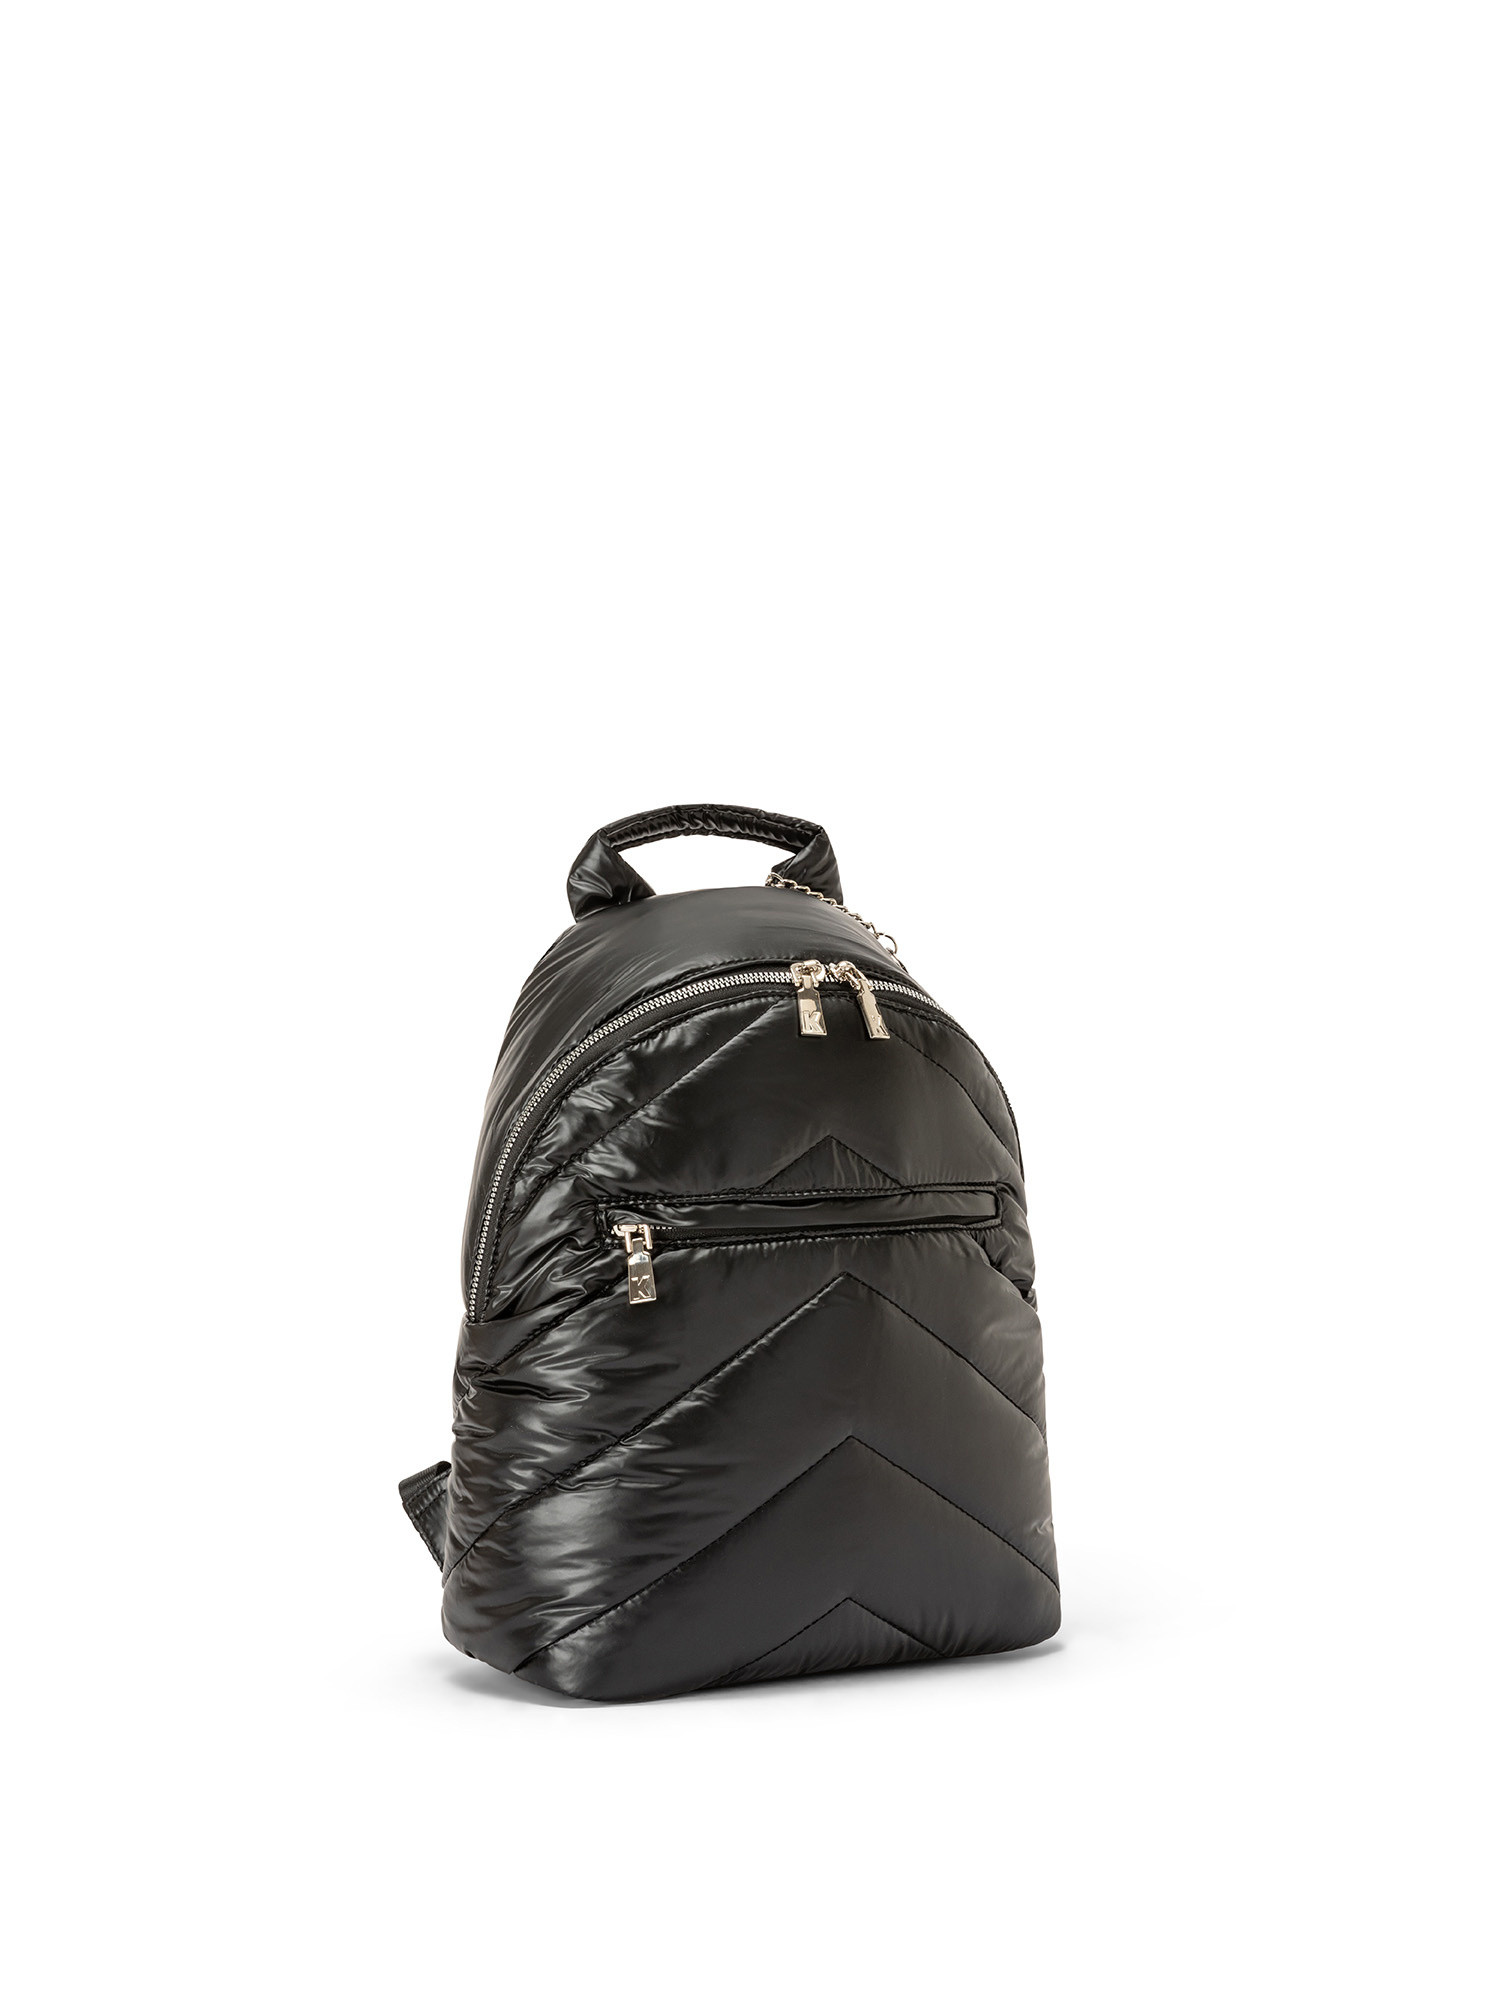 Koan - Nylon backpack, Black, large image number 1